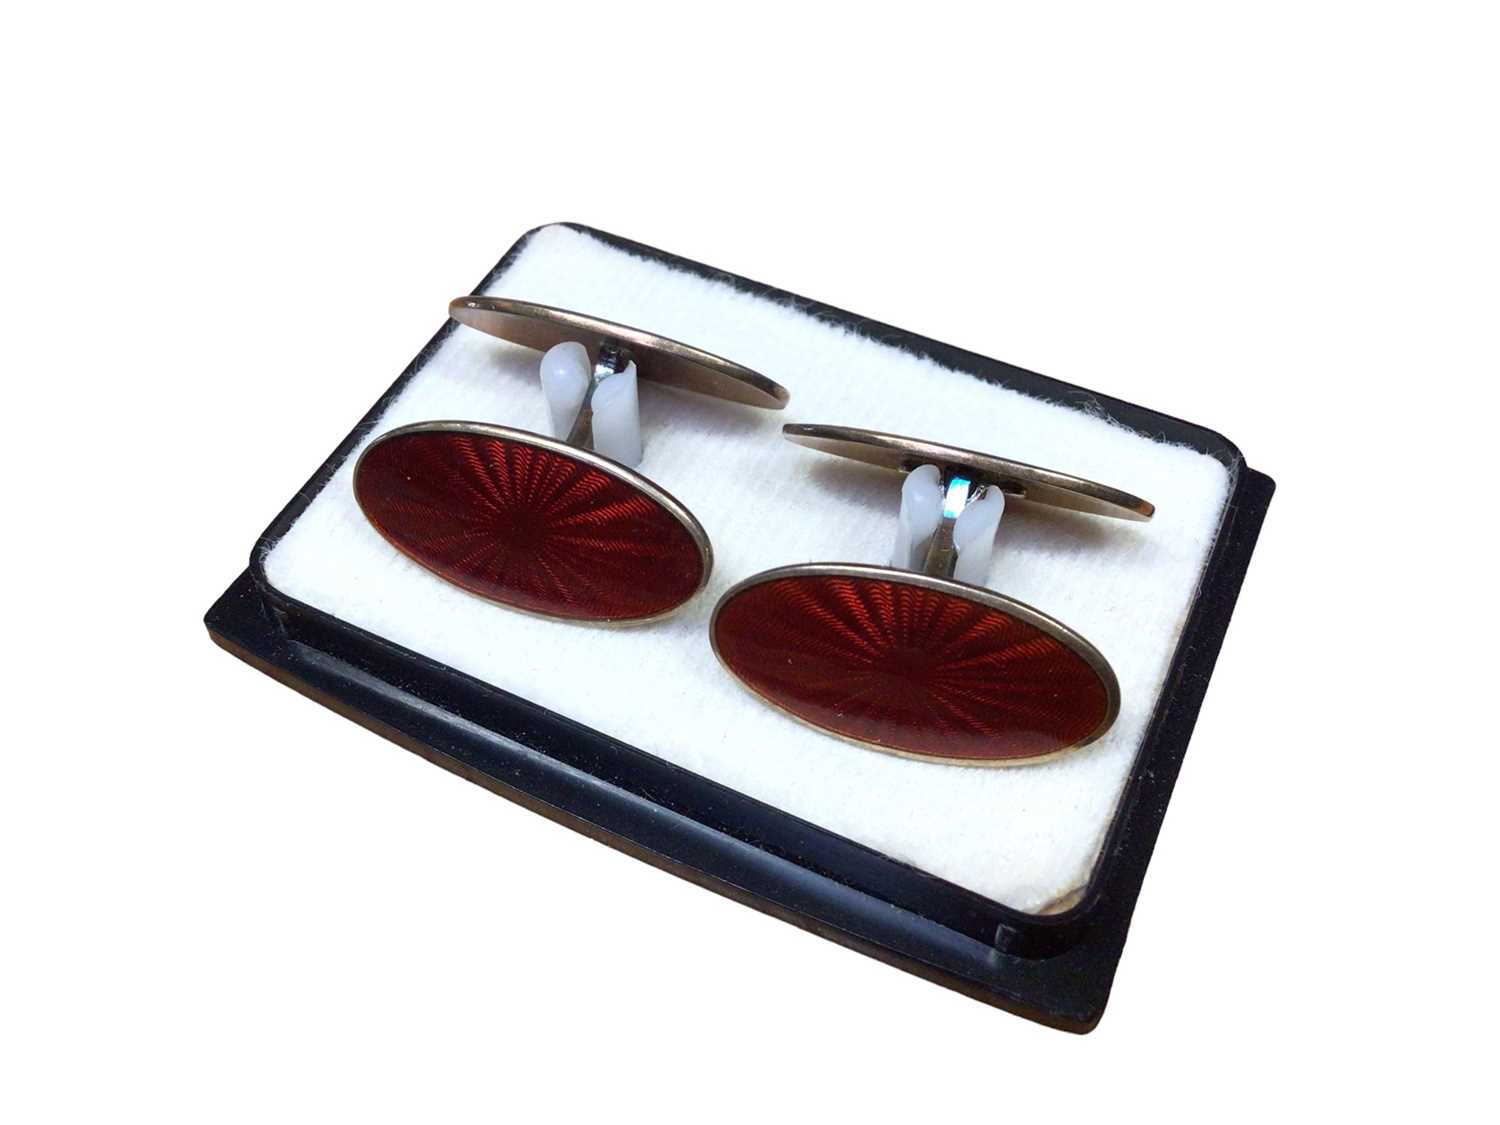 Pair of David Andersen Norwegian silver gilt and red guilloché enamel cufflinks in original box - Image 2 of 6